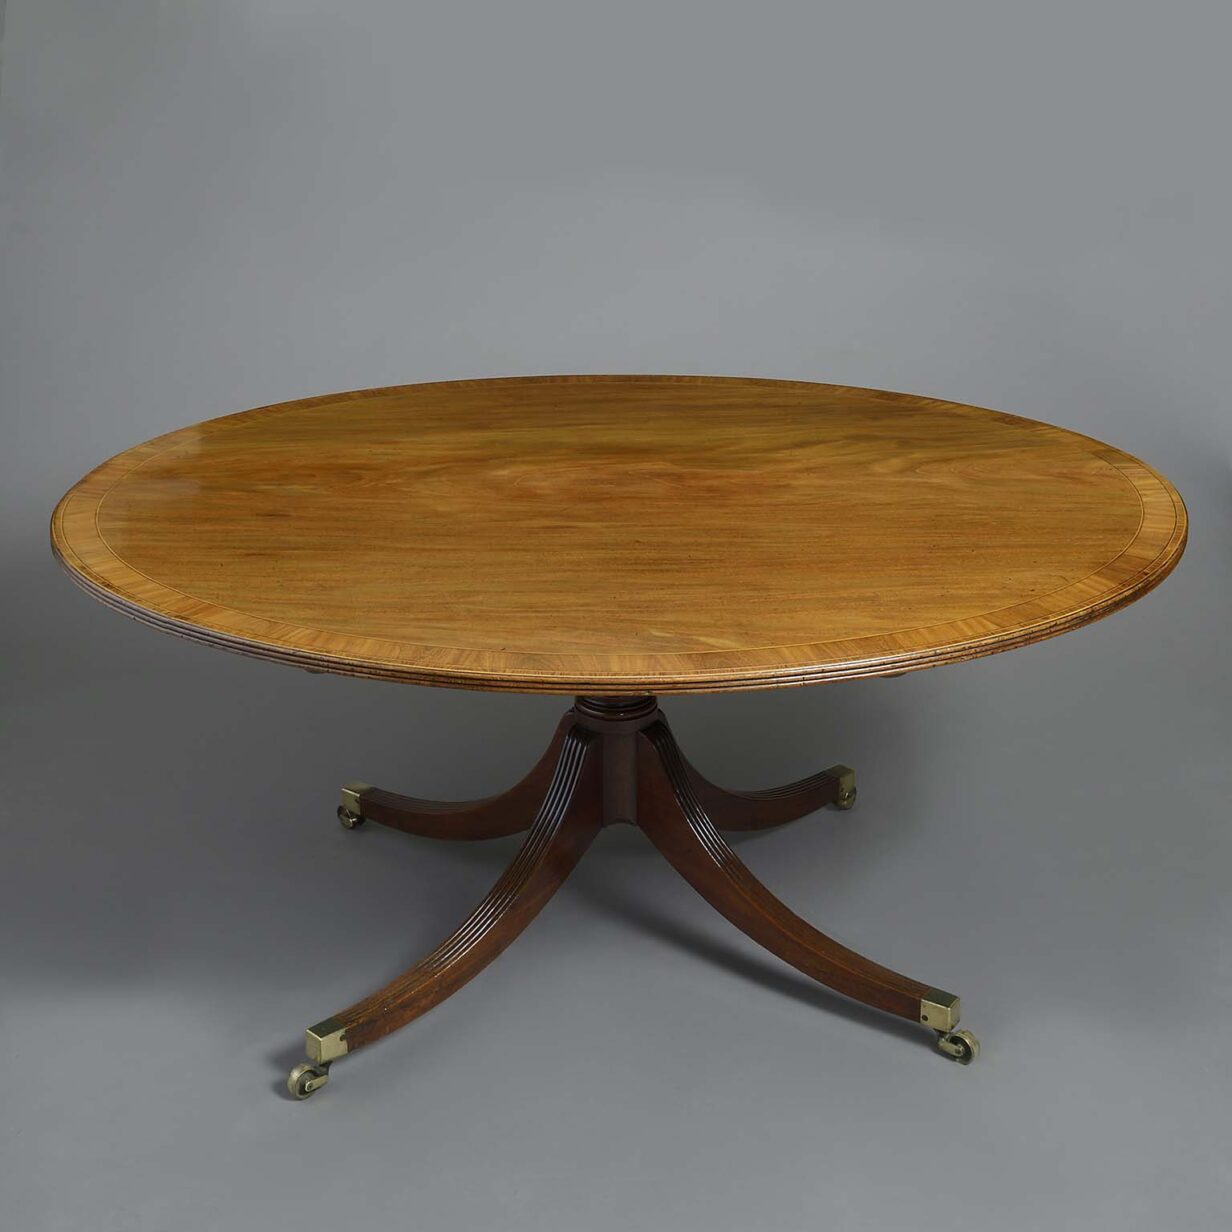 Late 18th century george iii period mahogany breakfast table